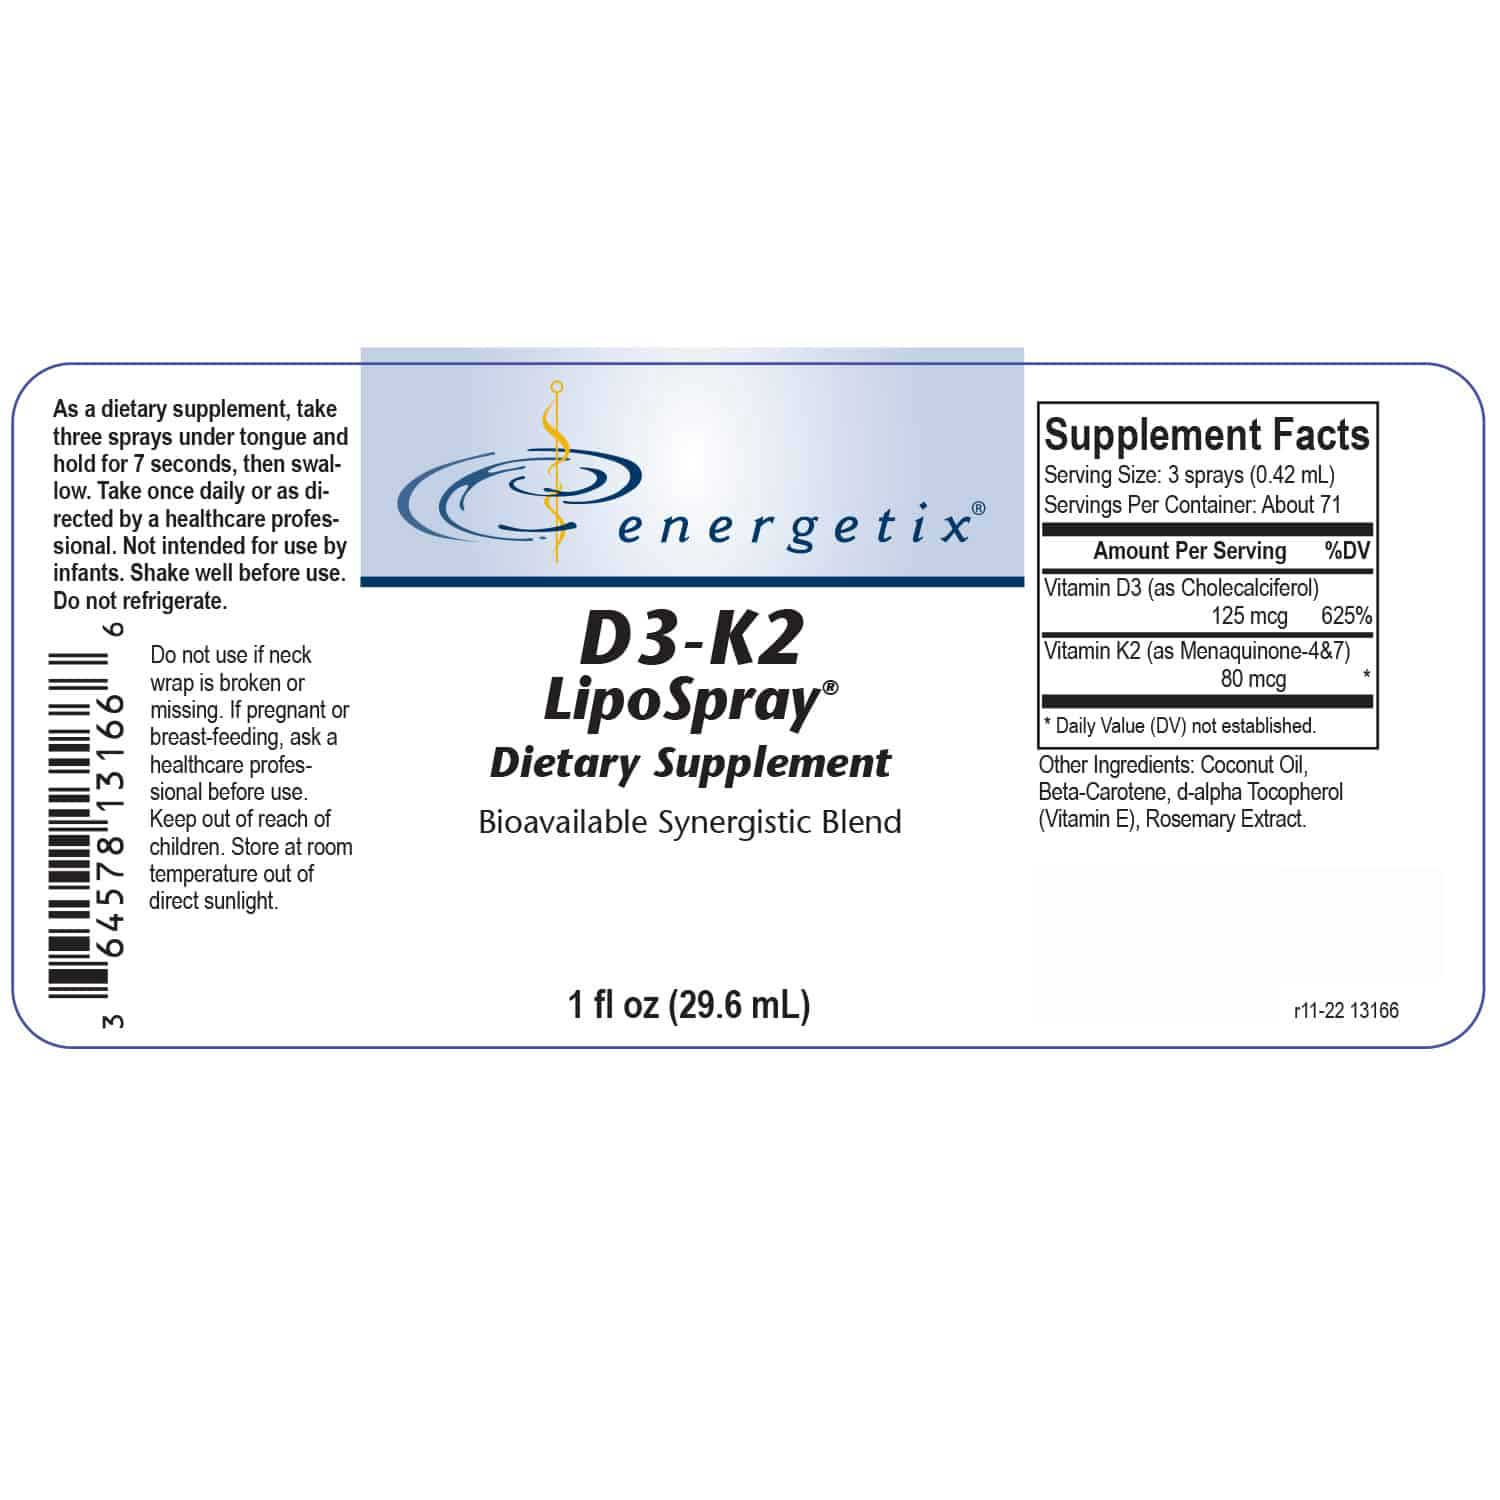 Energetix D3 K2 Lipo Spray Label